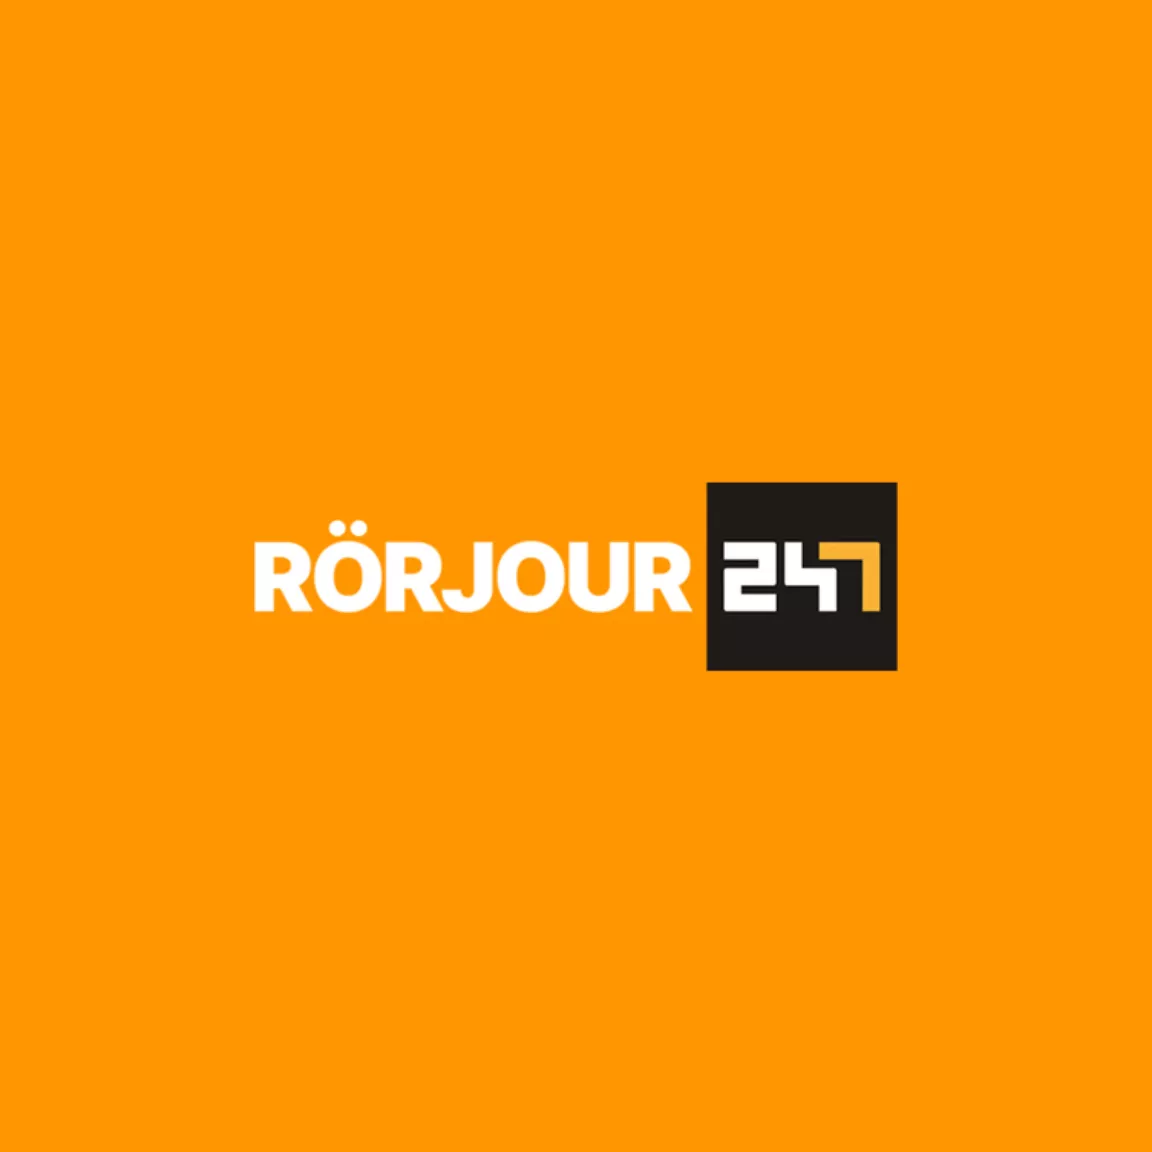 Rorjour247 ipisverige2